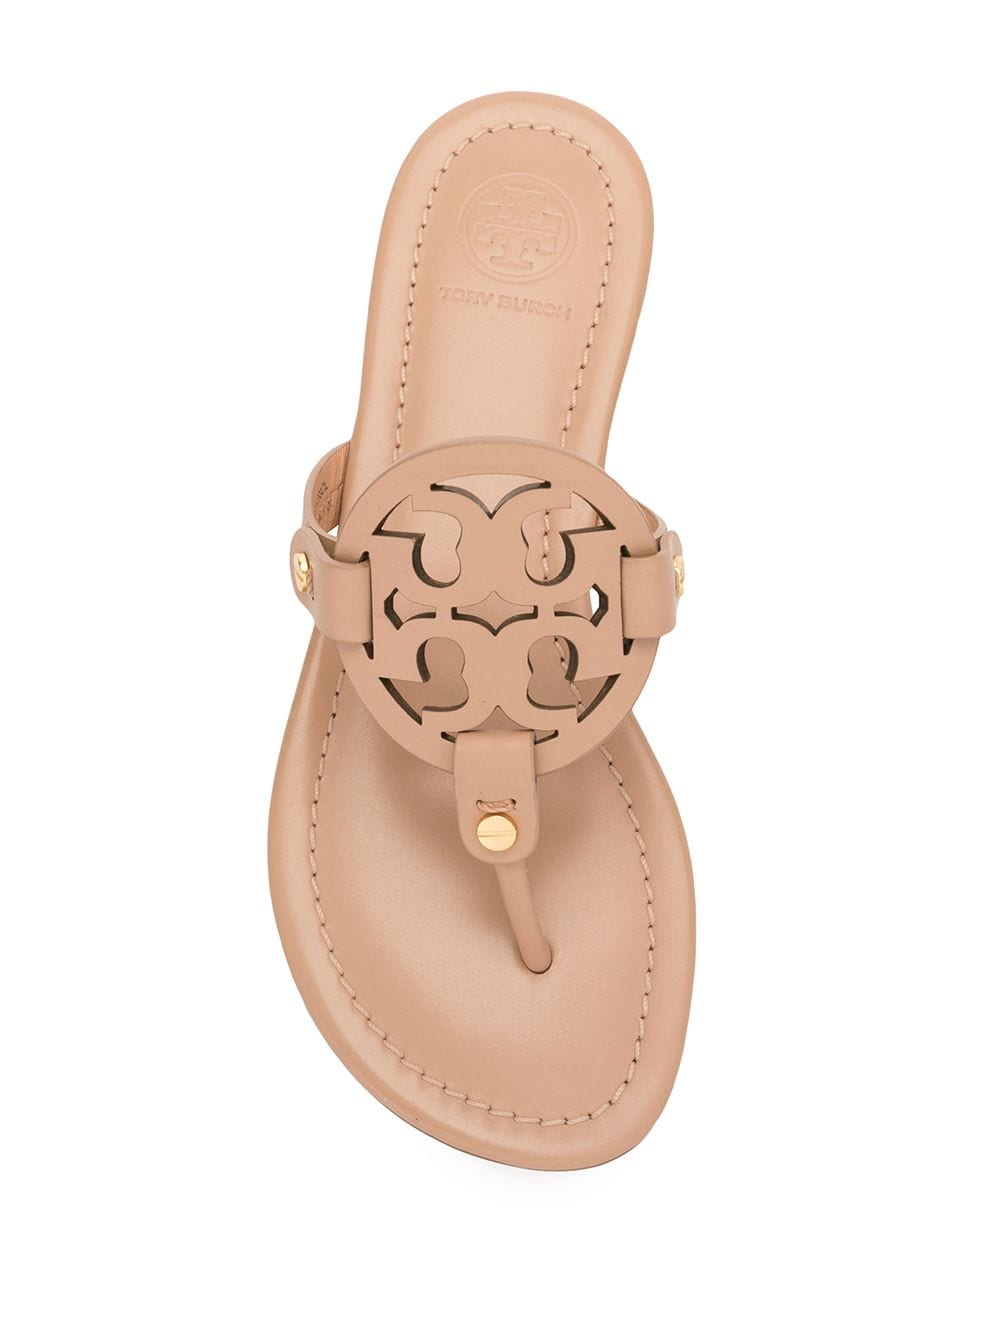 Light brown leather T-medallion sandals